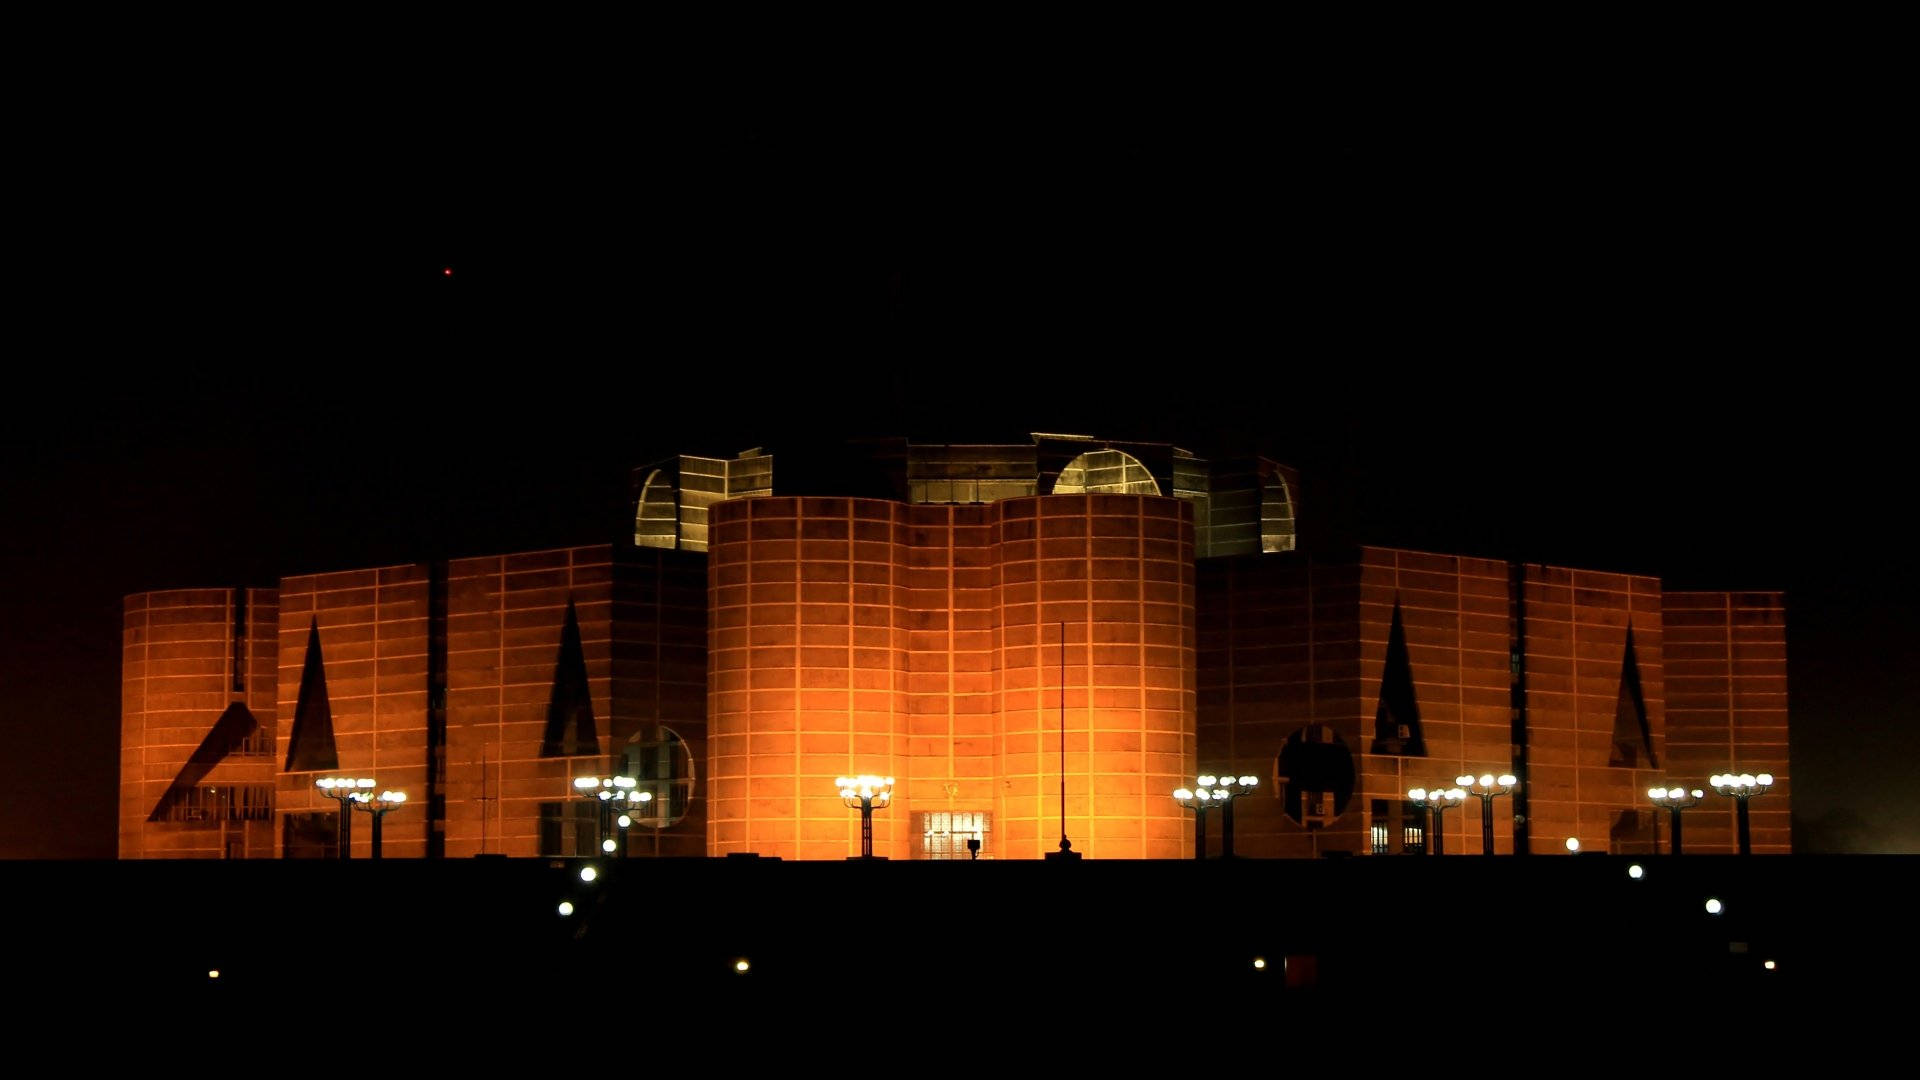 Bangladesh National Parliament